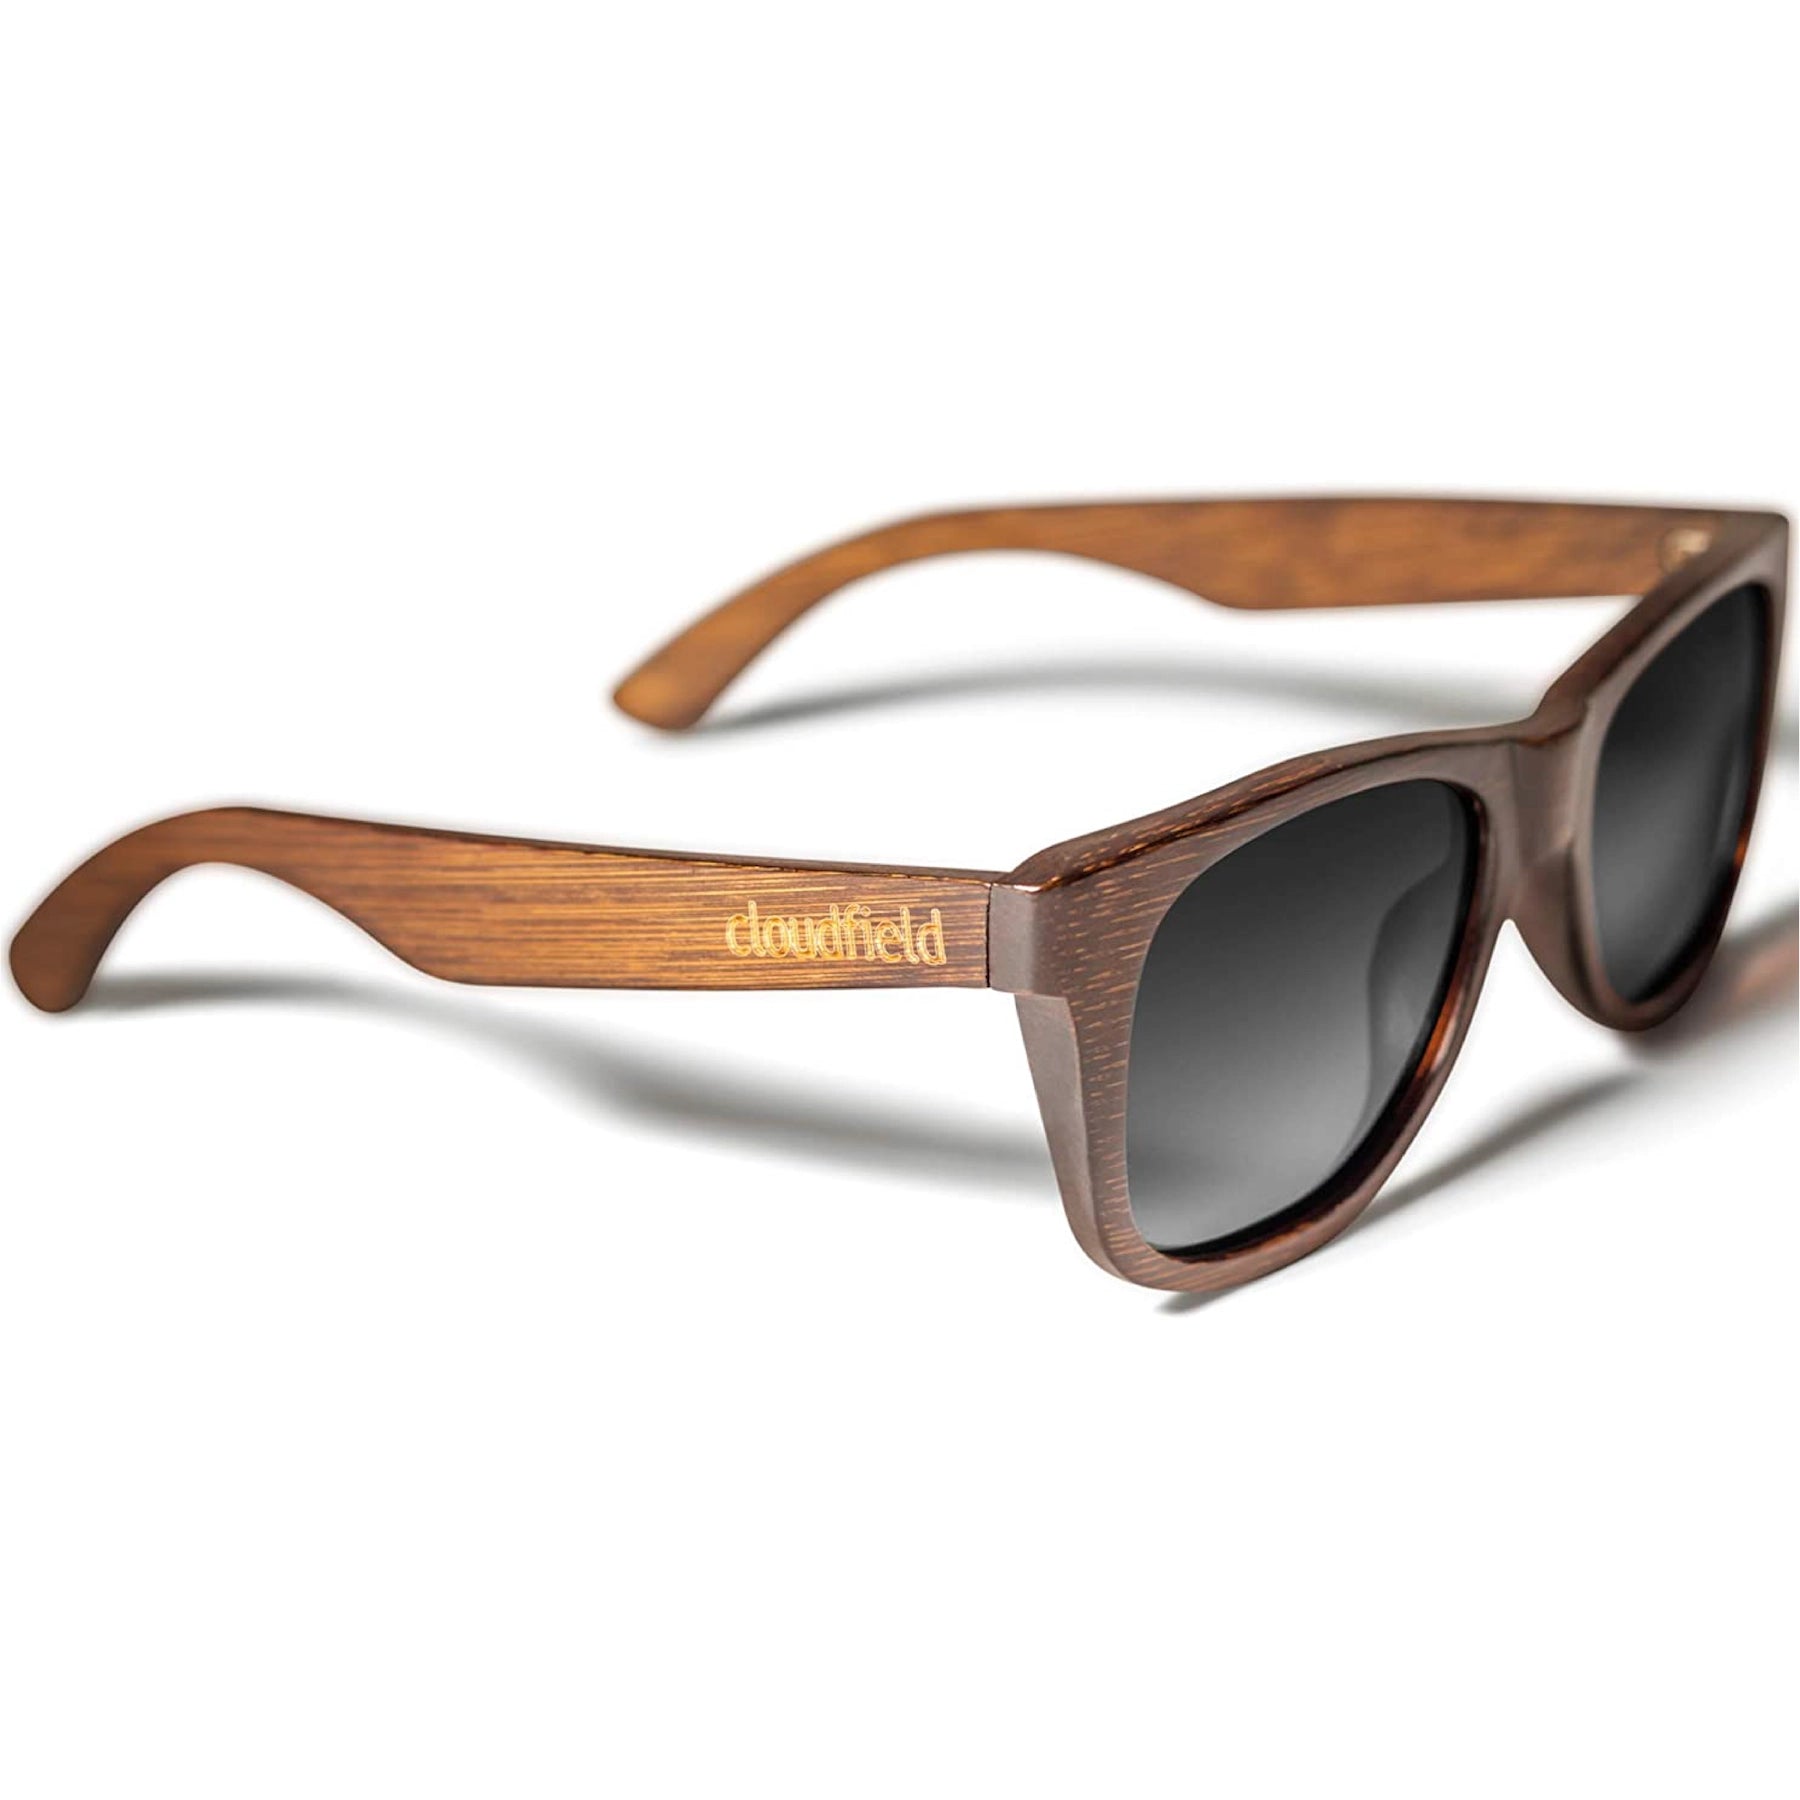 Cloudfield Unisex Polarized Wood Sunglasses - Oakwood